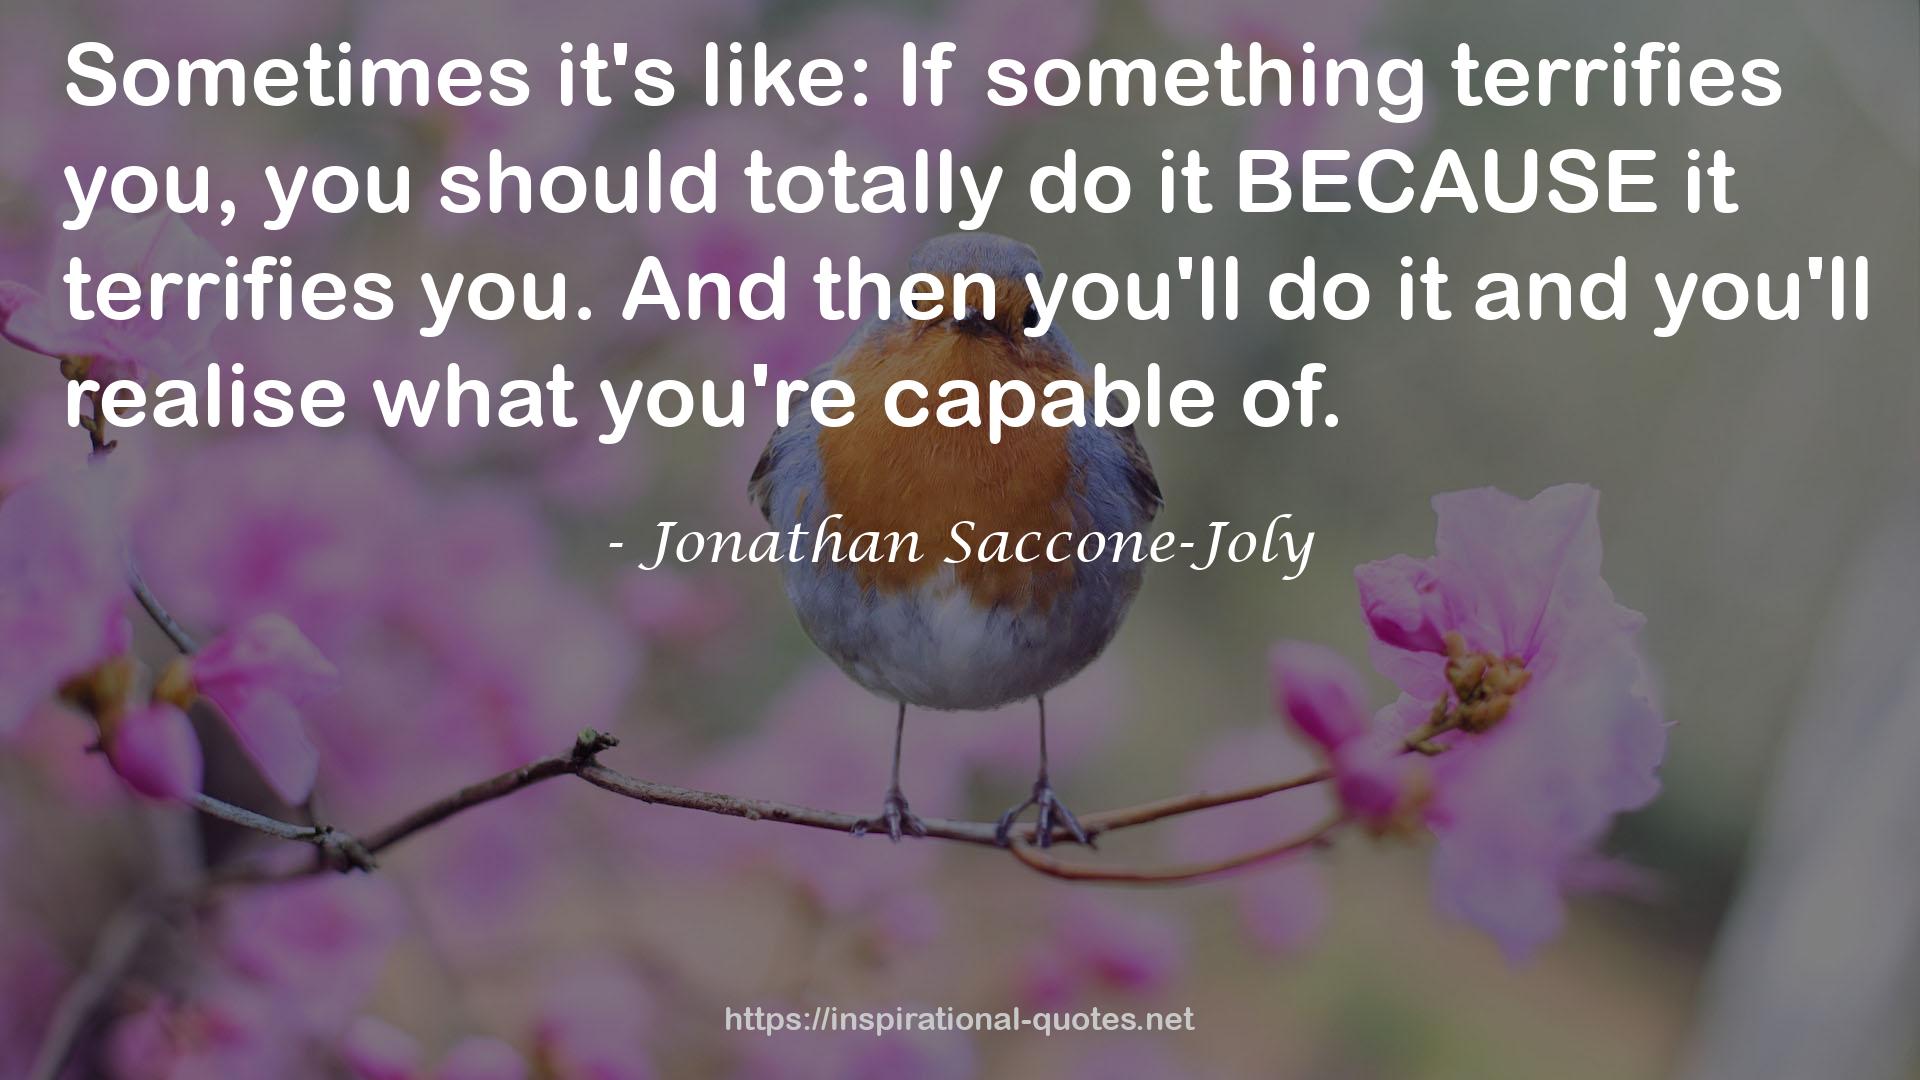 Jonathan Saccone-Joly QUOTES